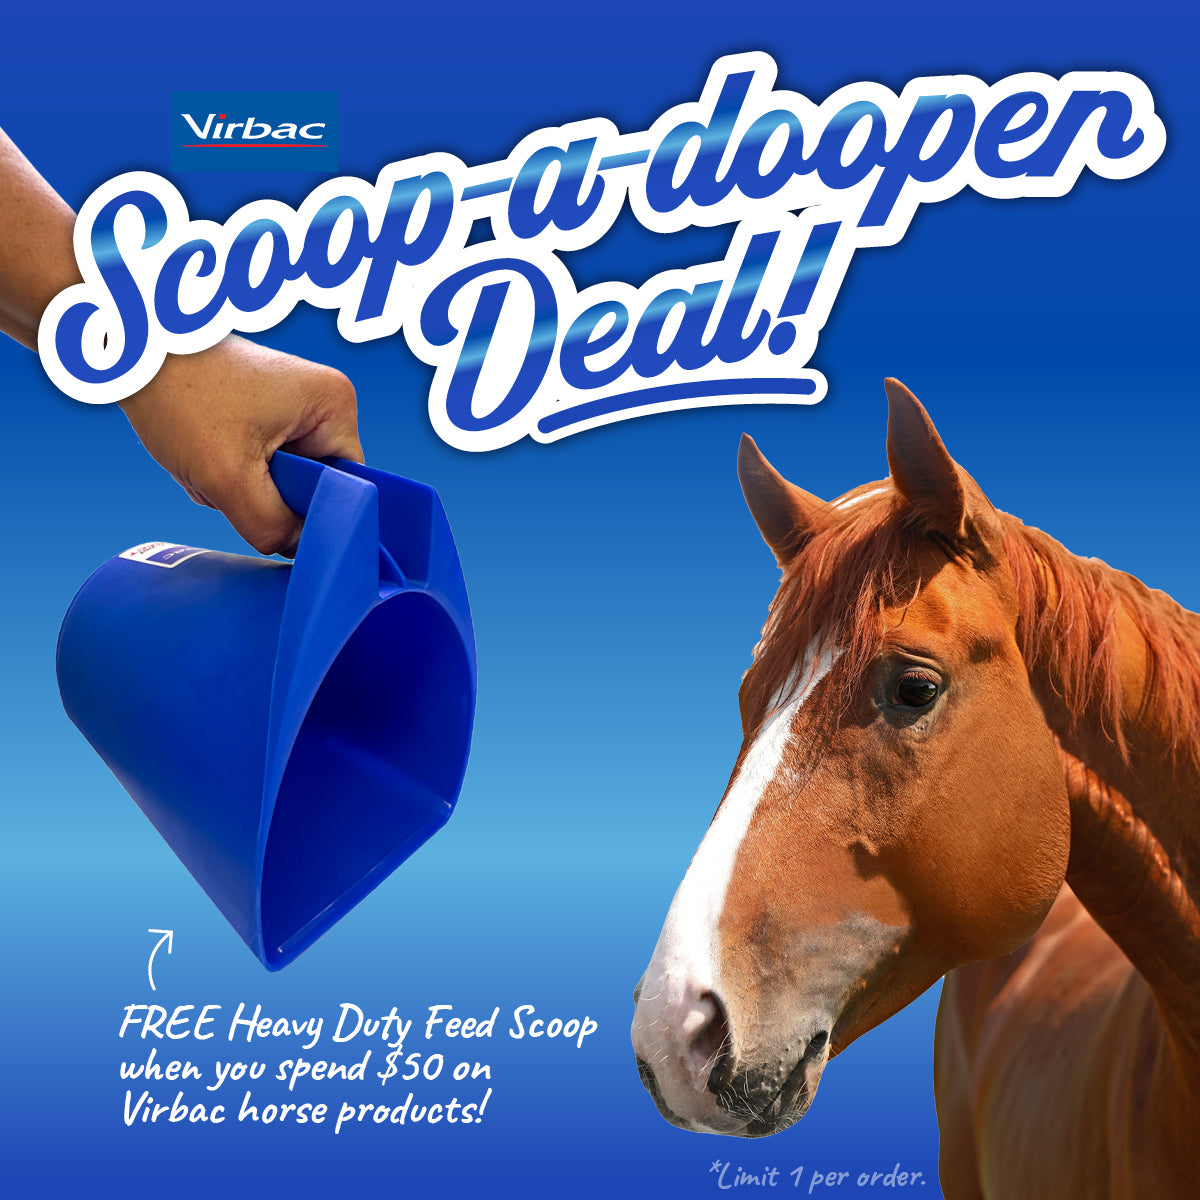 Virbac Scoop-a-dooper Feed Scoop